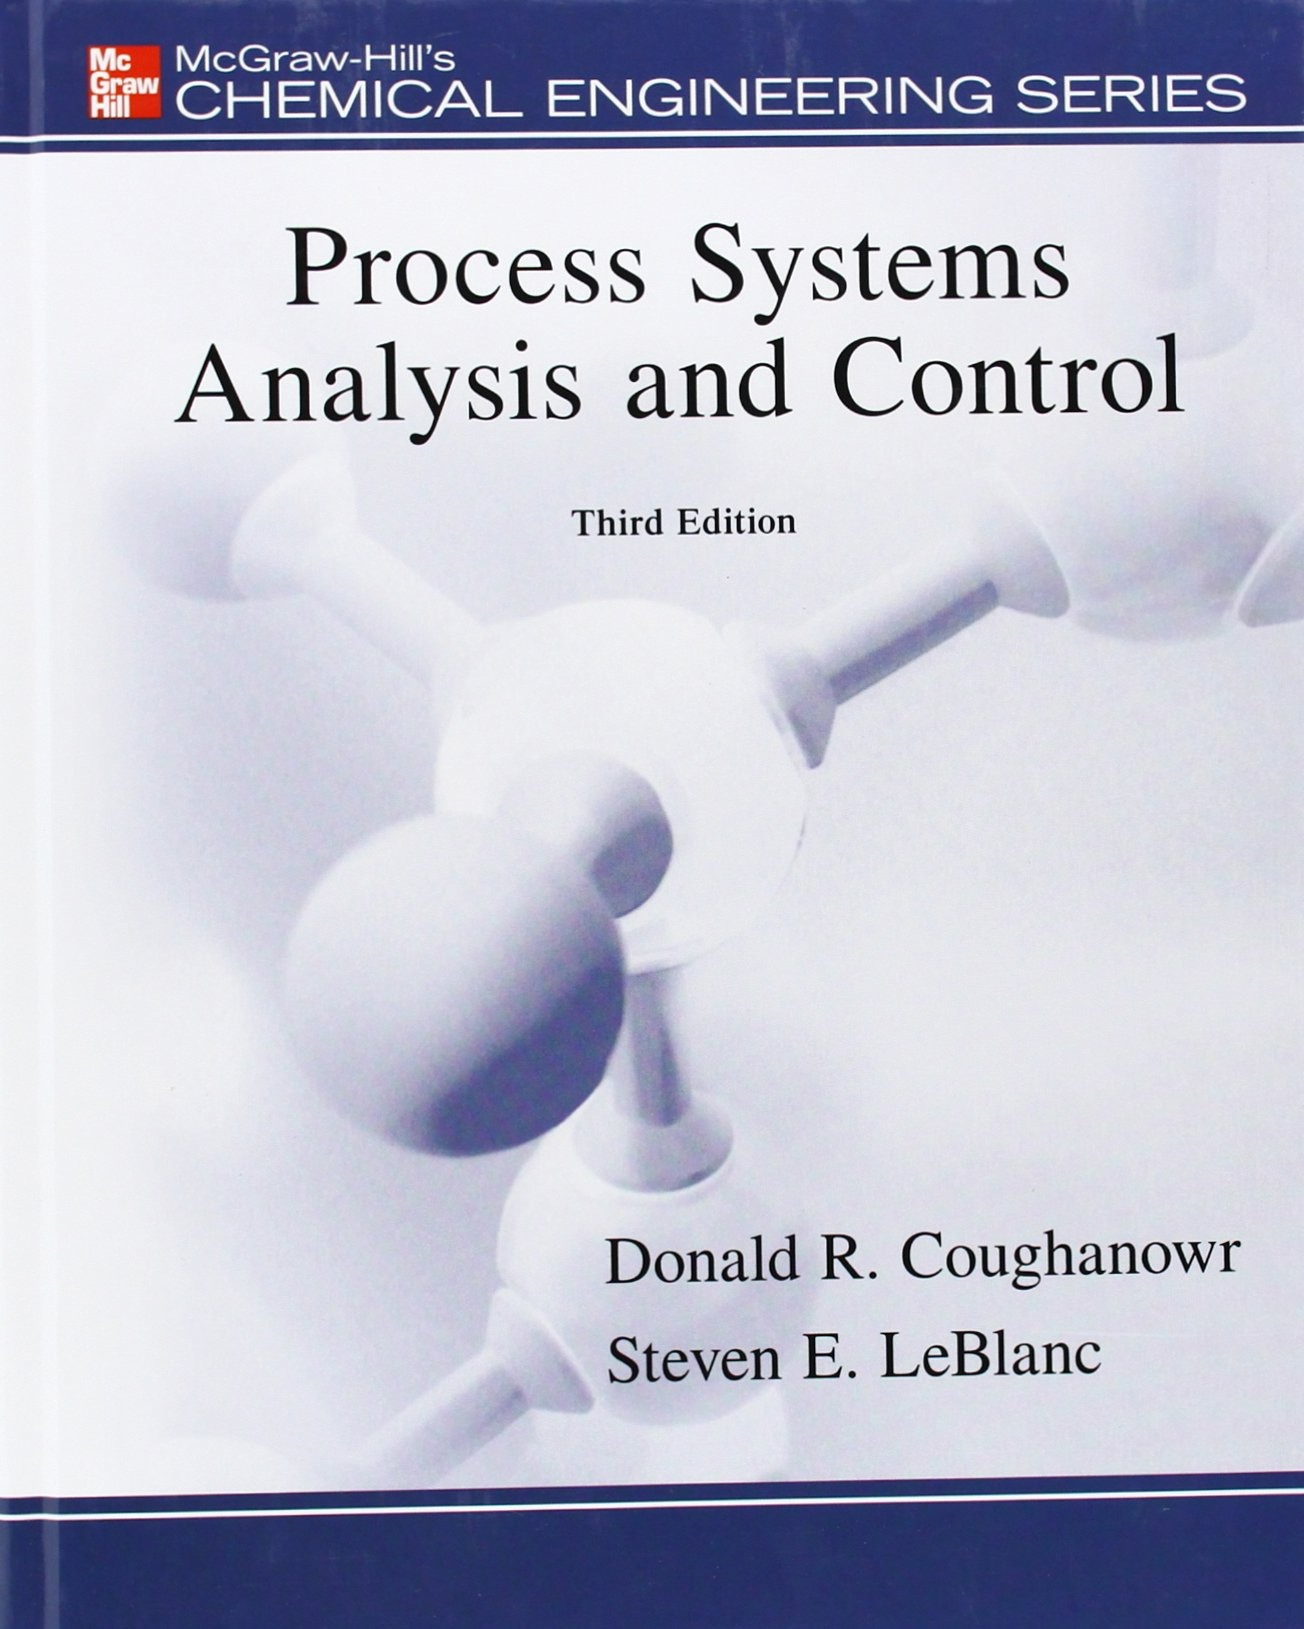 Process systems analysis and control Steven E LeBlanc pdf